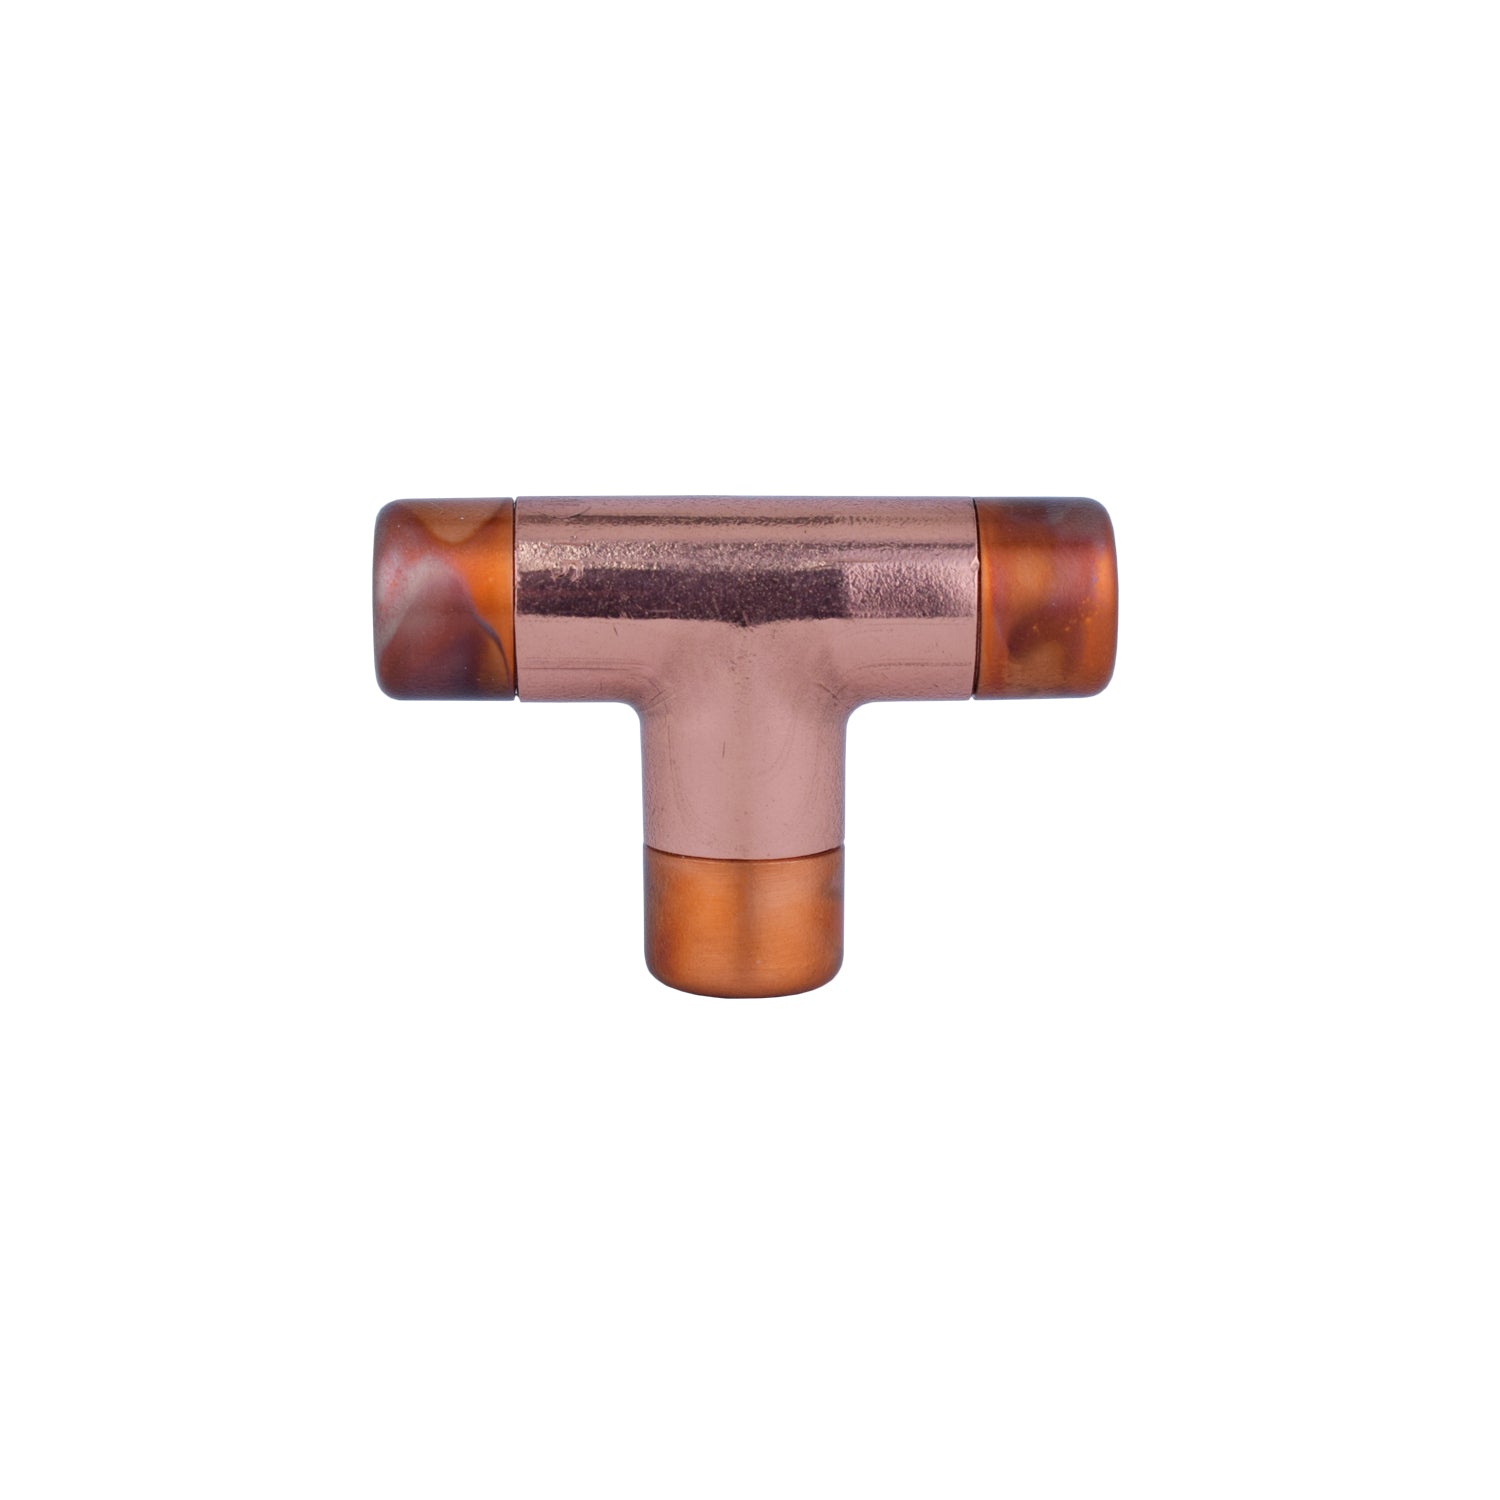 Copper Knob T-shaped - Marbled / High Polish Mix - Proper Copper Design